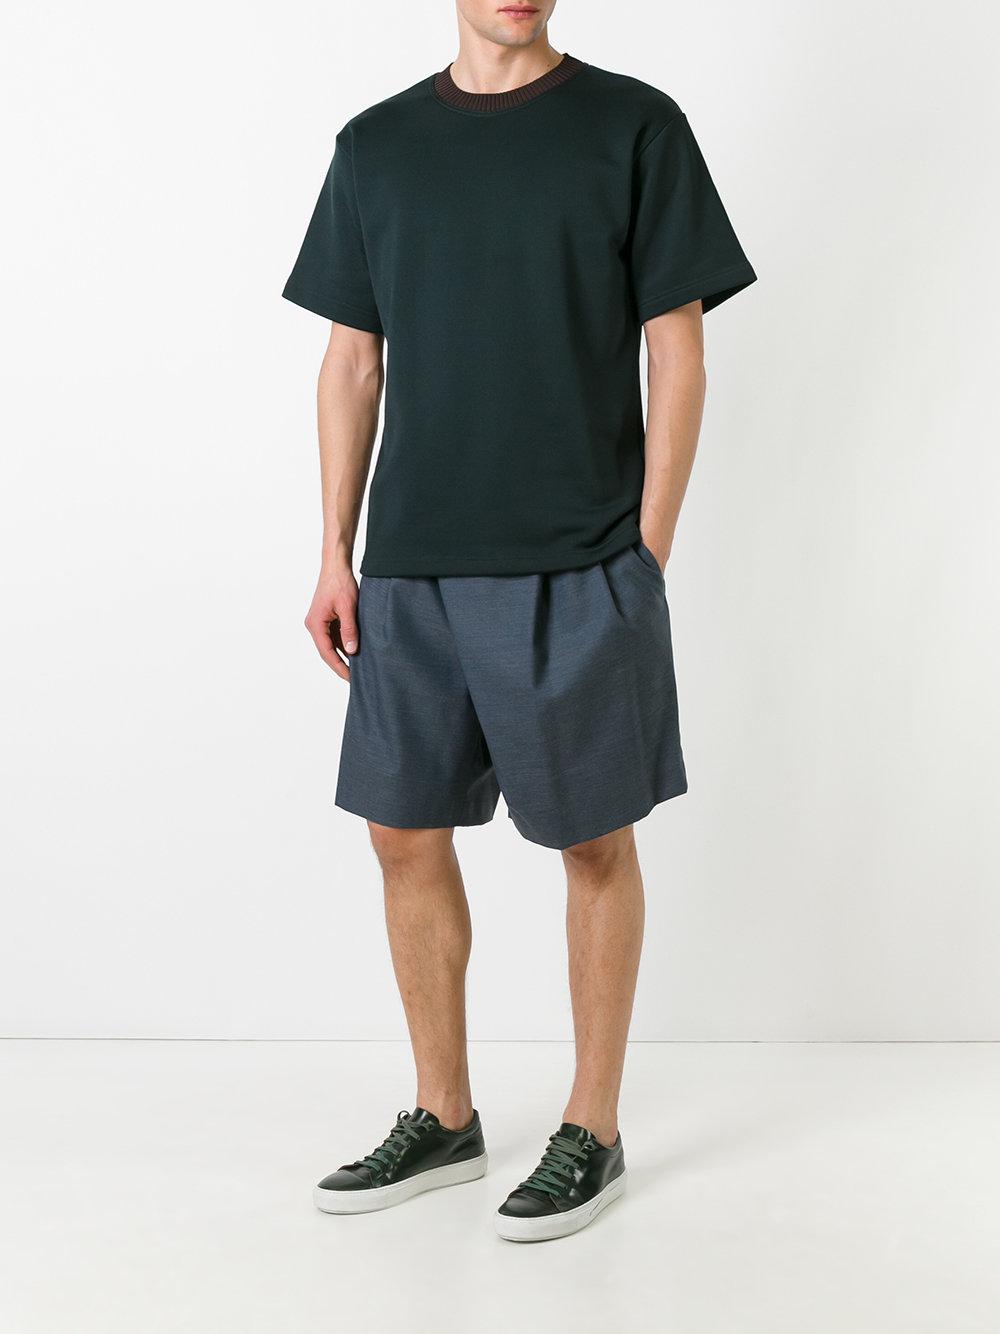 Lyst - Kolor Asymmetric Tailored Shorts in Gray for Men